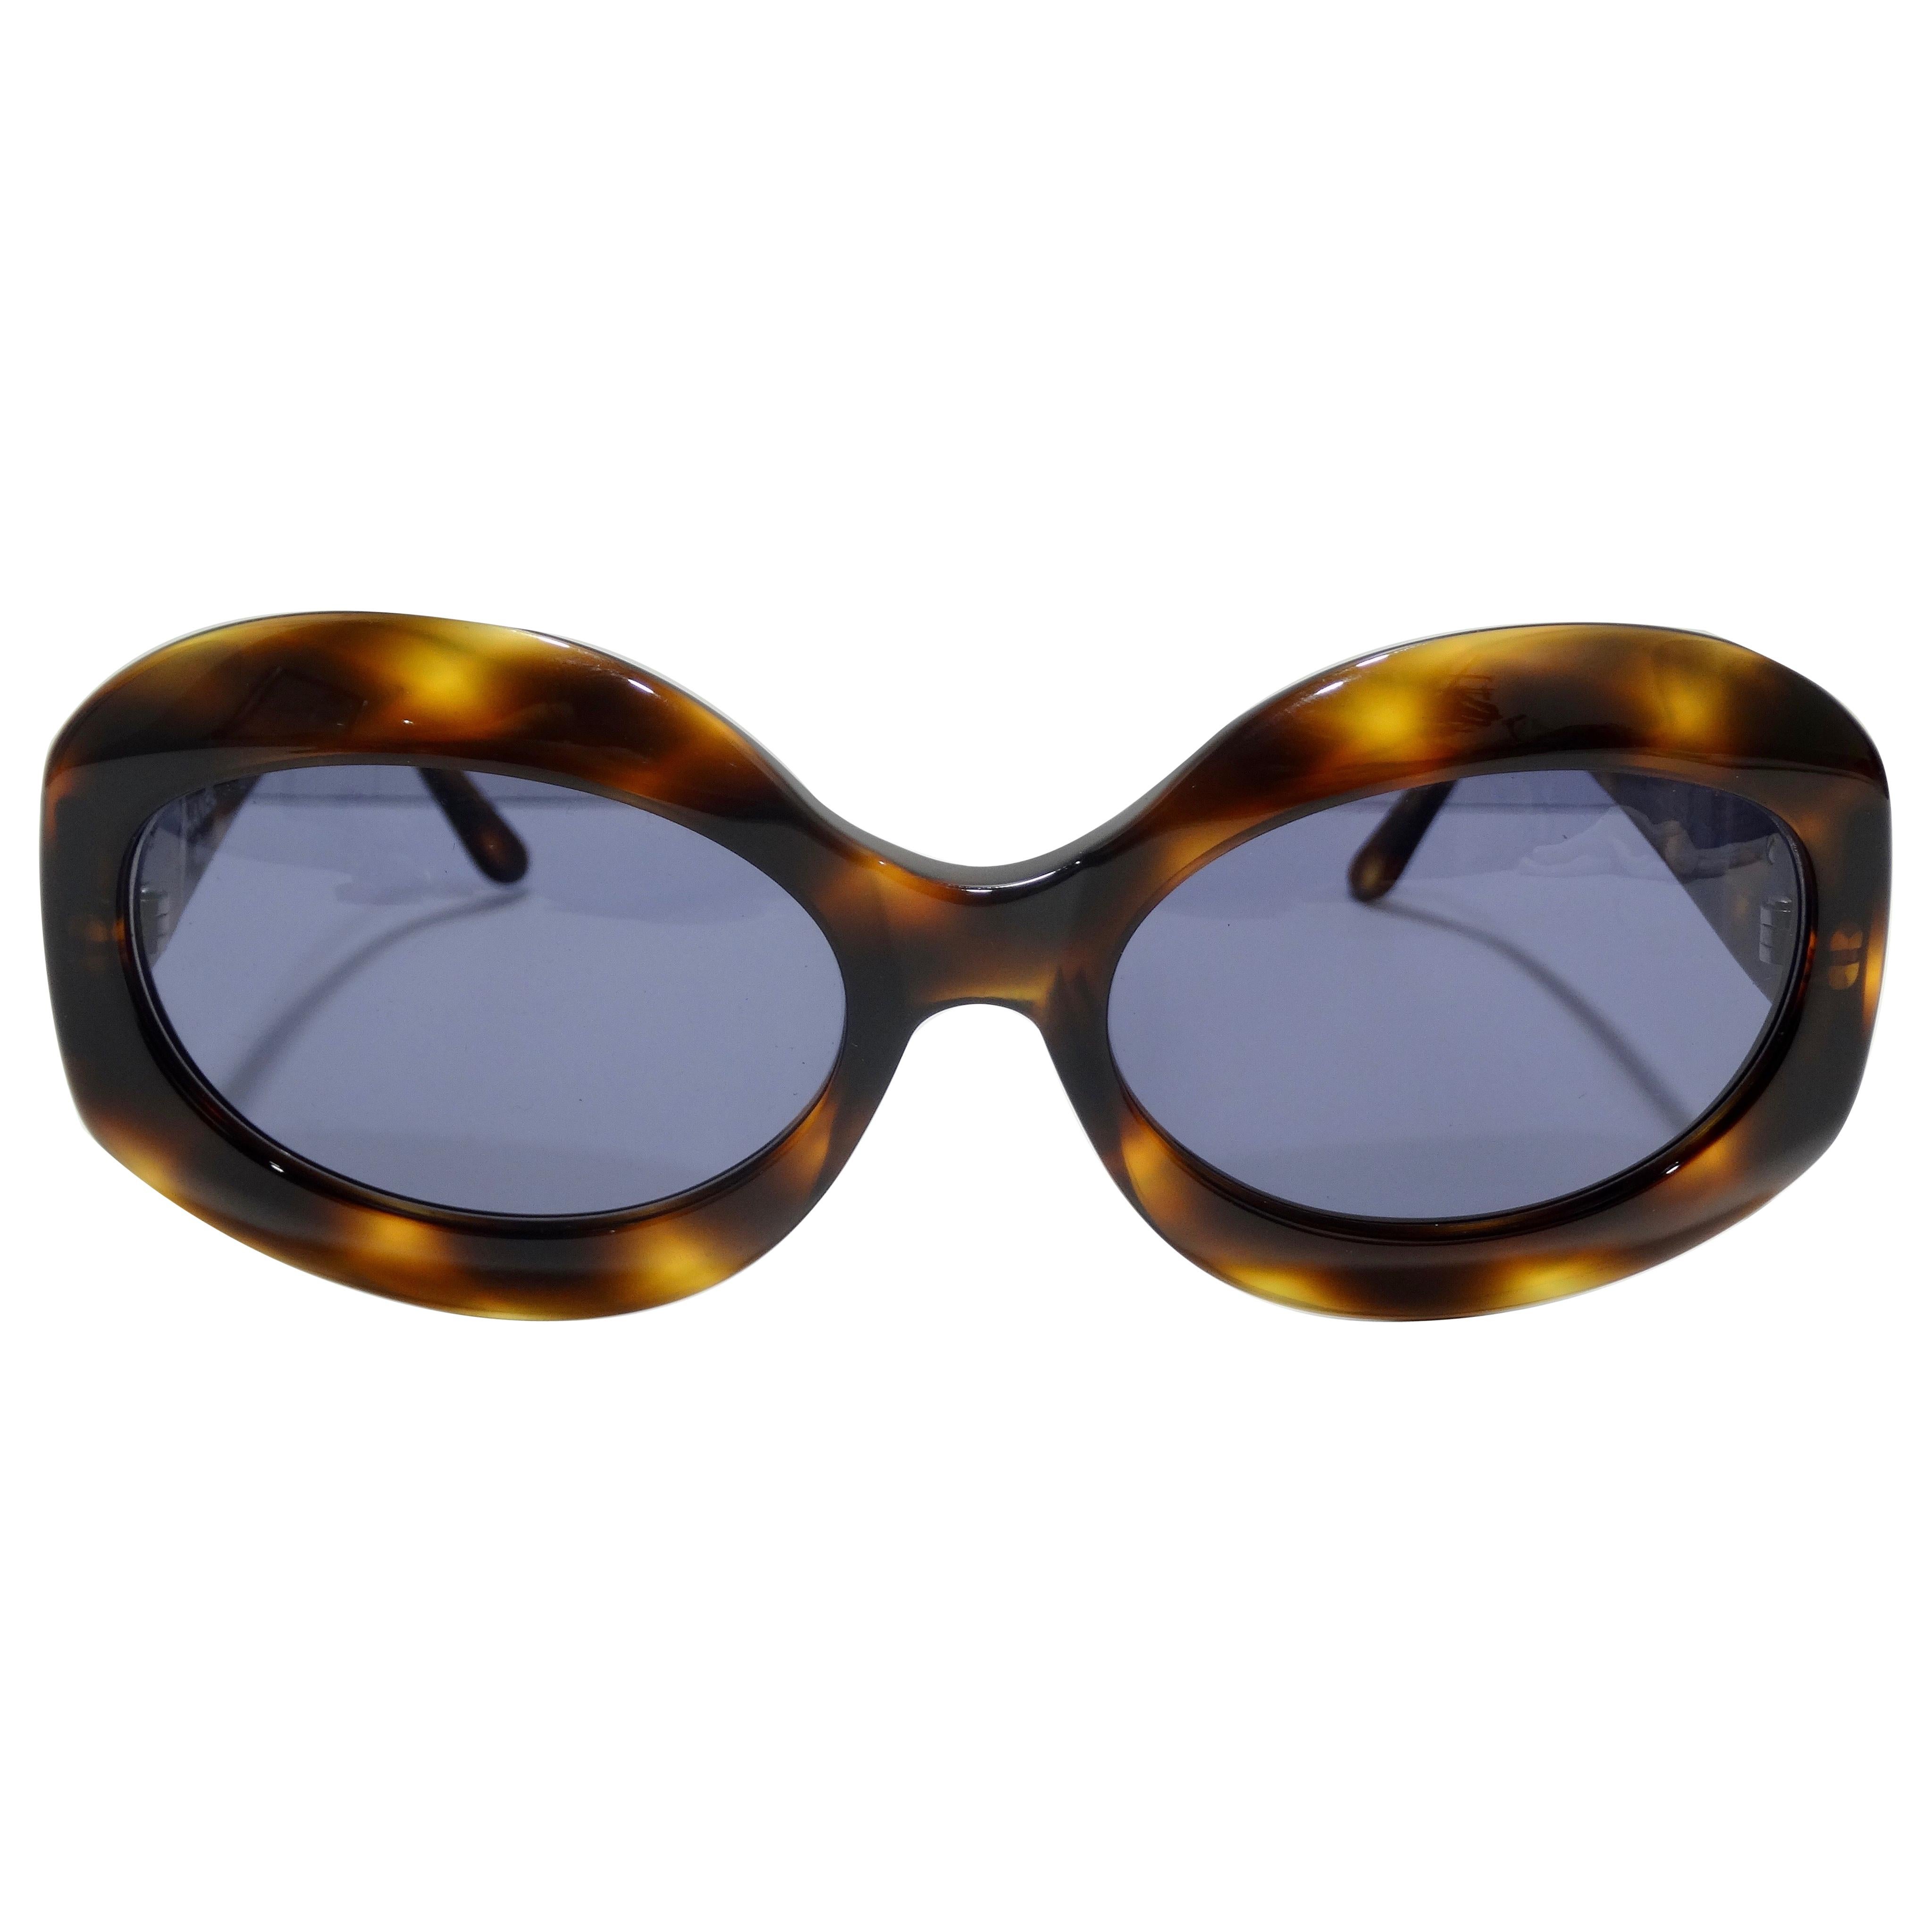 Chanel Vintage Oval Sunglasses - 5 For Sale on 1stDibs